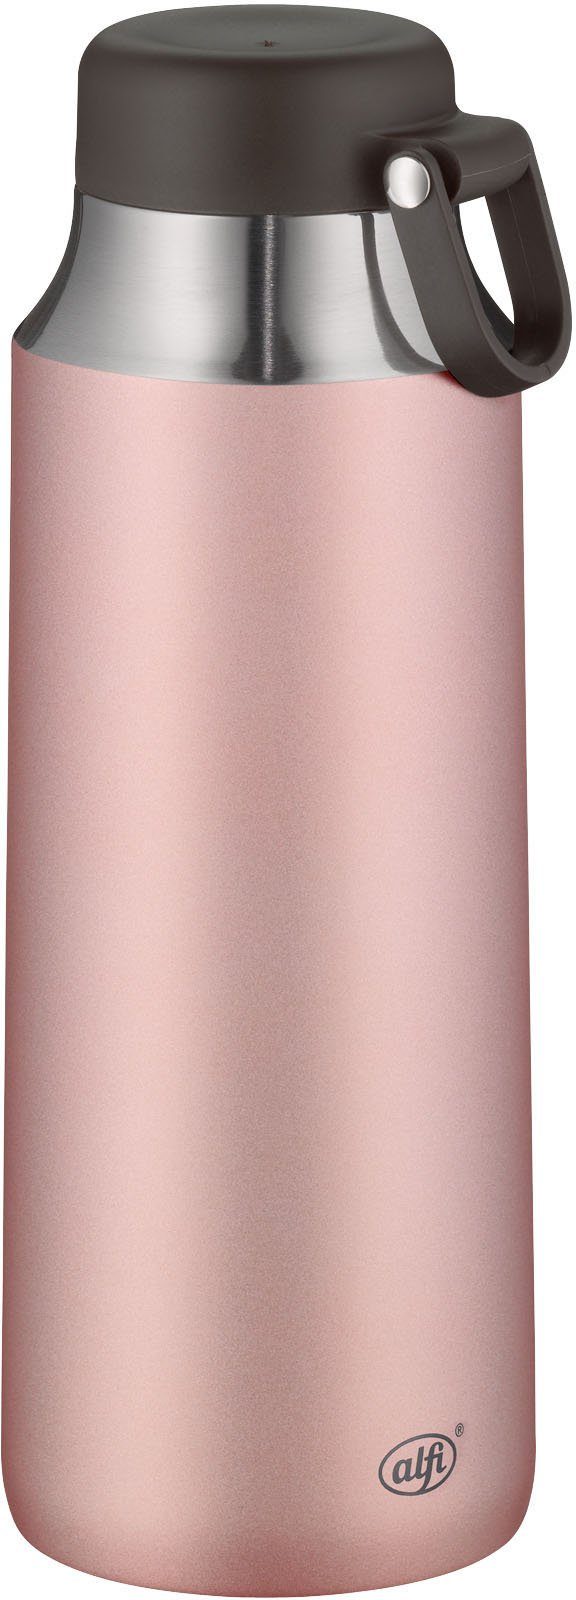 Alfi Thermoflasche Tea Bottle Cityline, Edelstahl, 0,9 Liter, ideal für Tee rosa